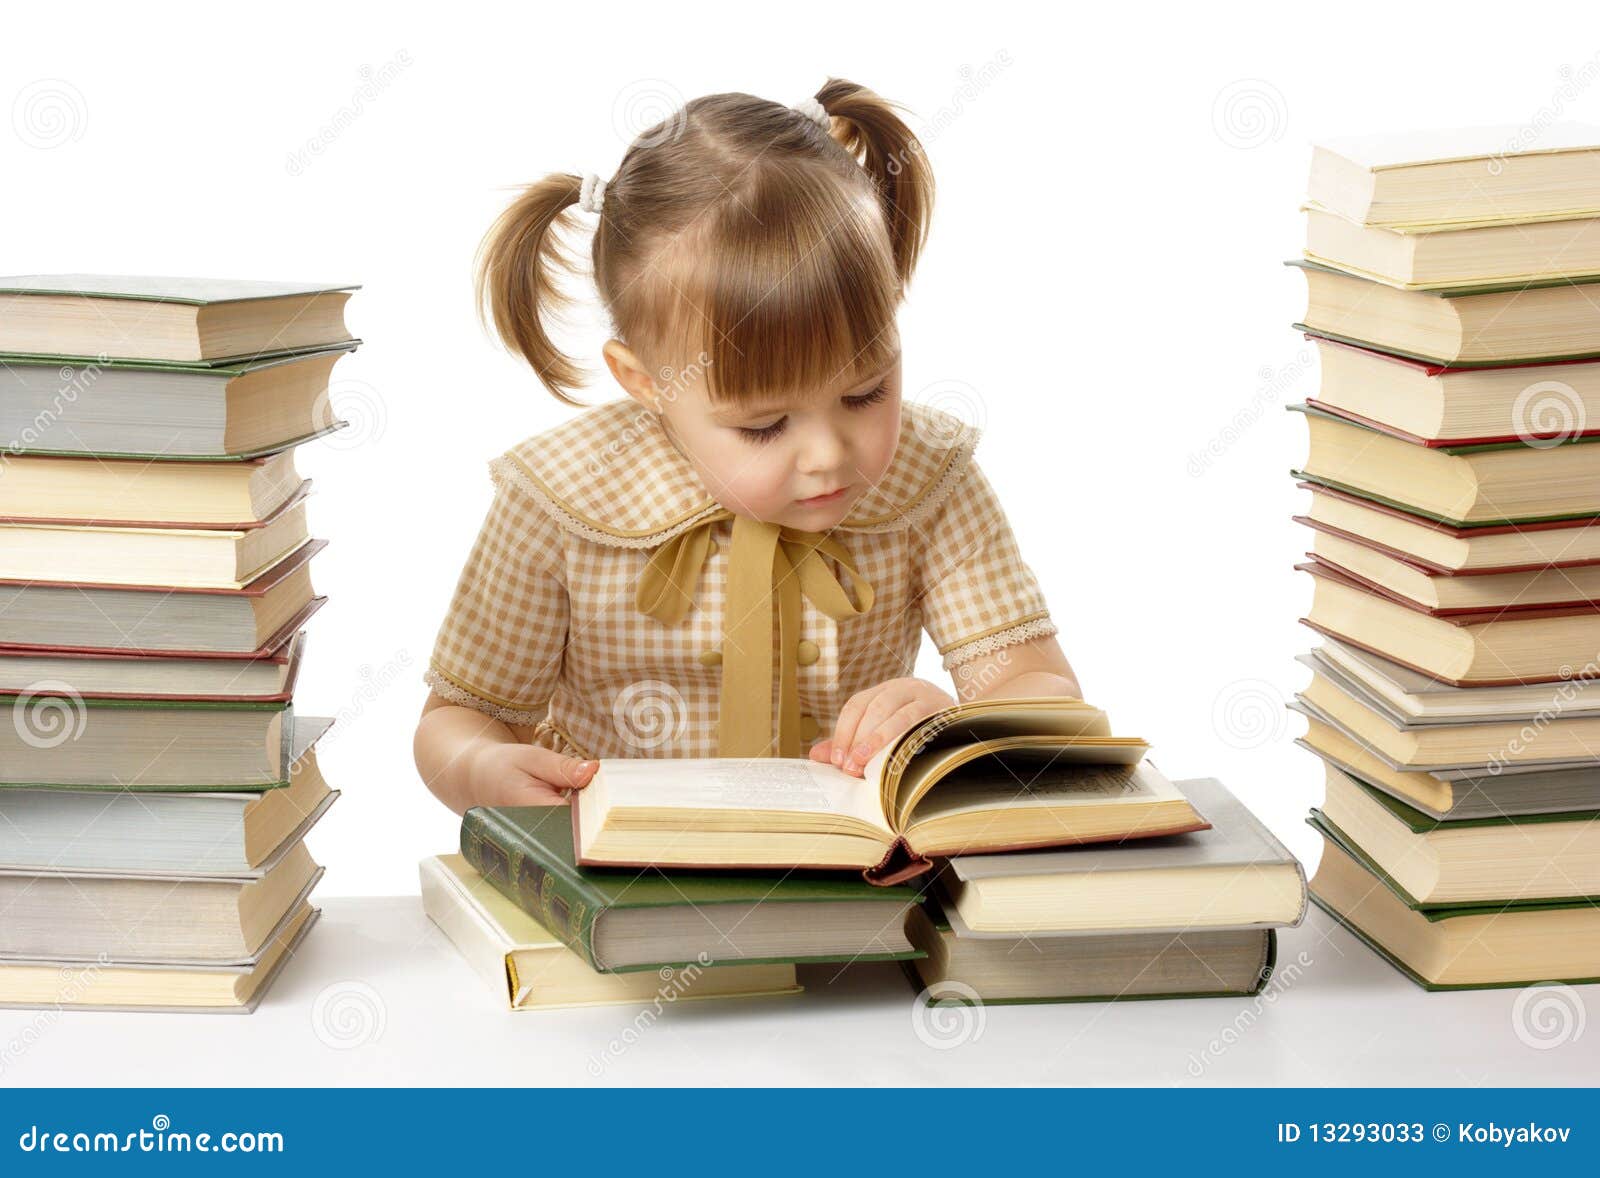 Book report little woman